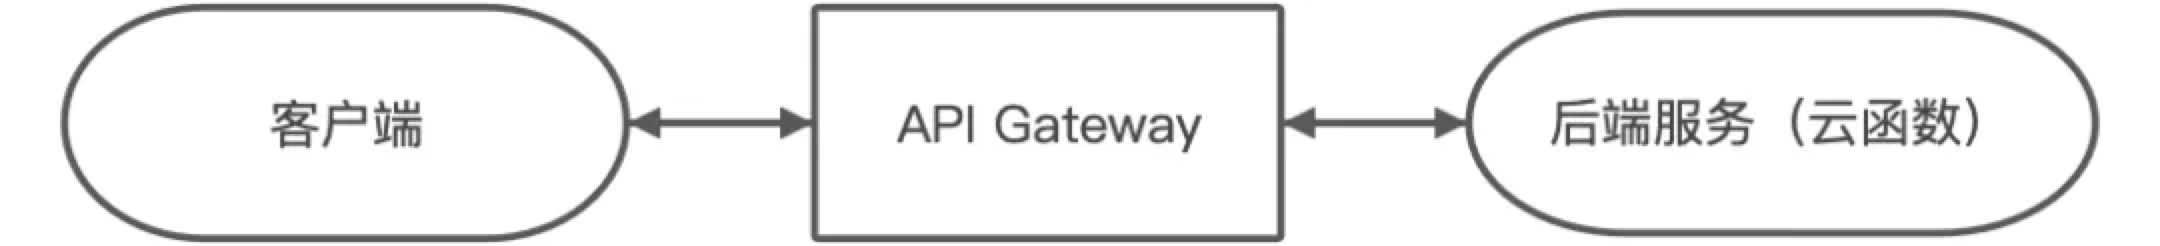 知晓云_API Gateway.png